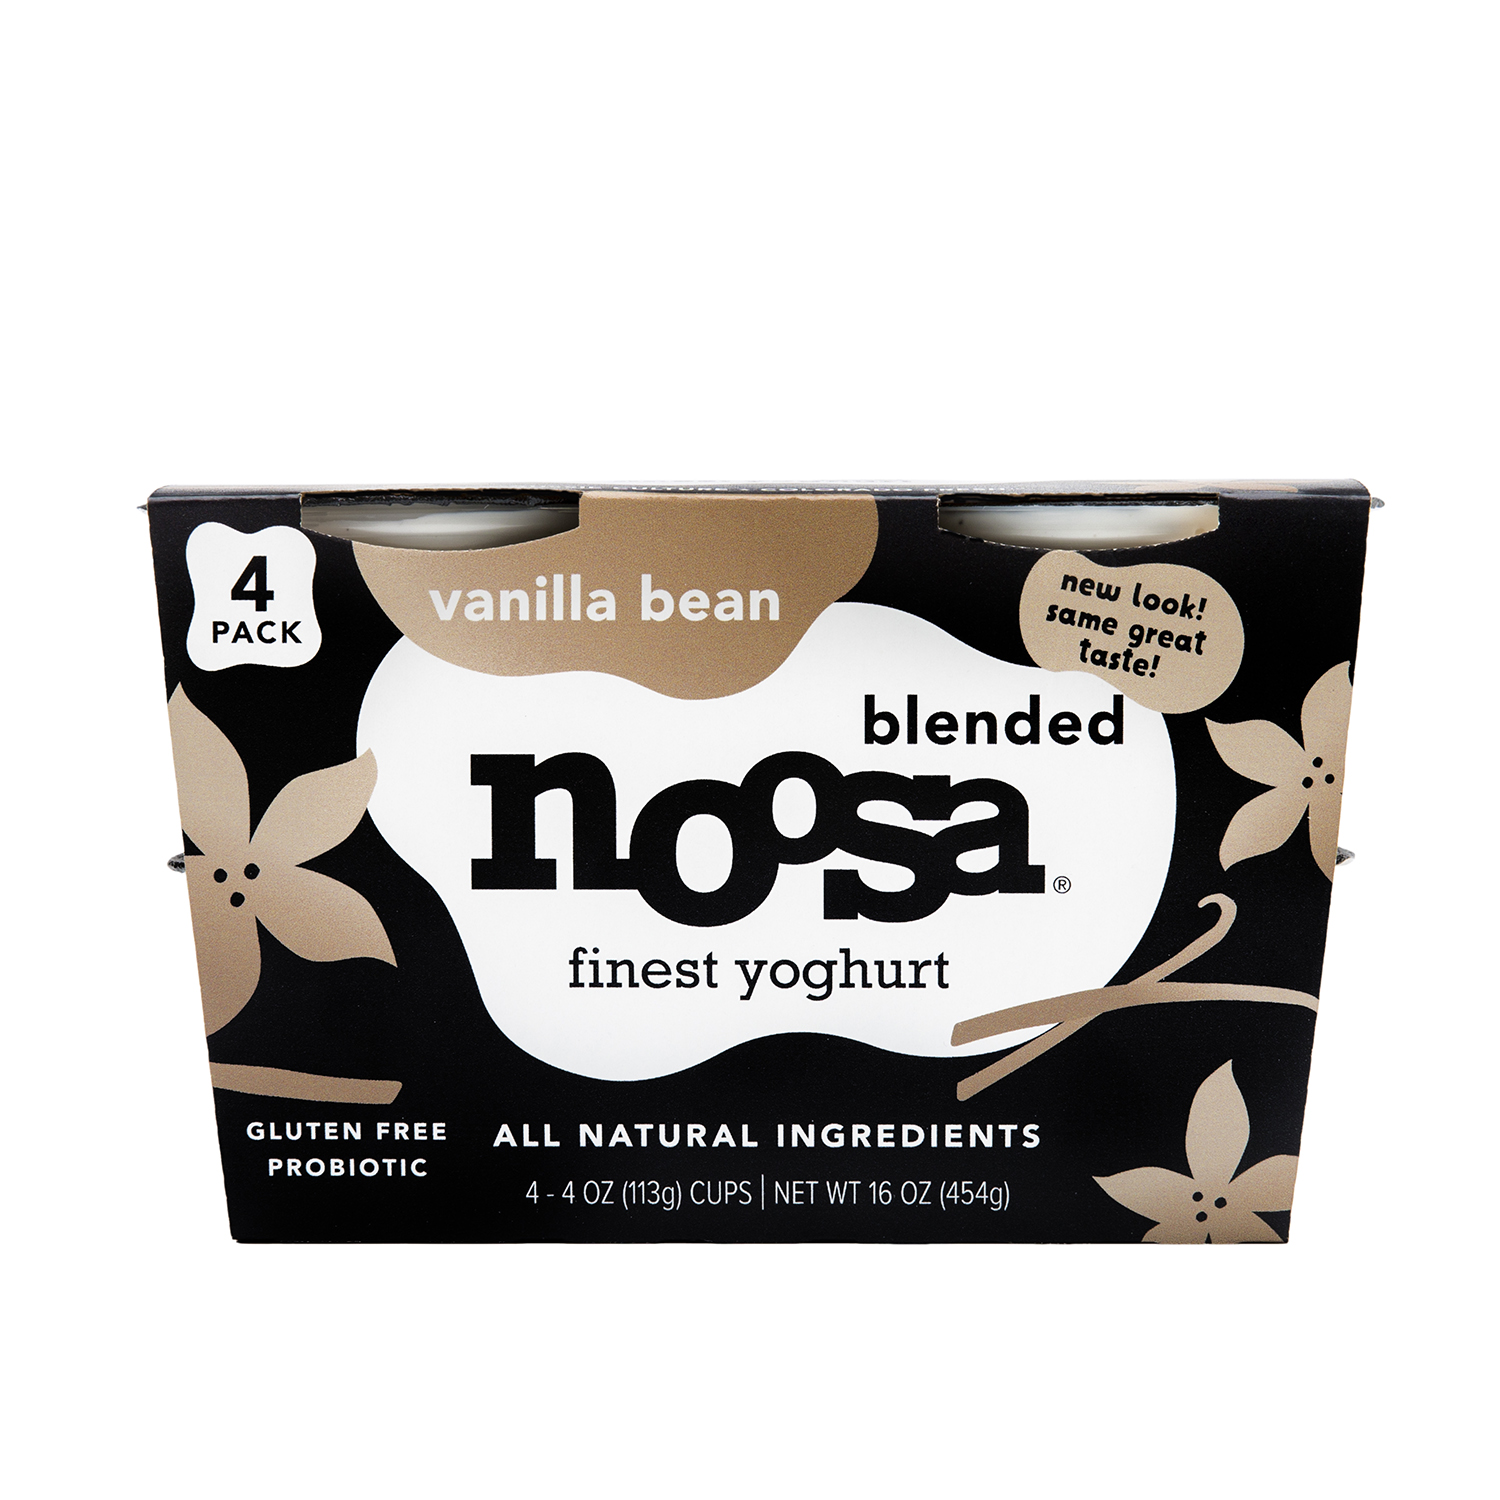 Noosa Yoghurt, Blended Whole Milk Yogurt, Velvety Smooth & Creamy, Vanilla Bean, 4 oz, Pack of 4 - image 1 of 2